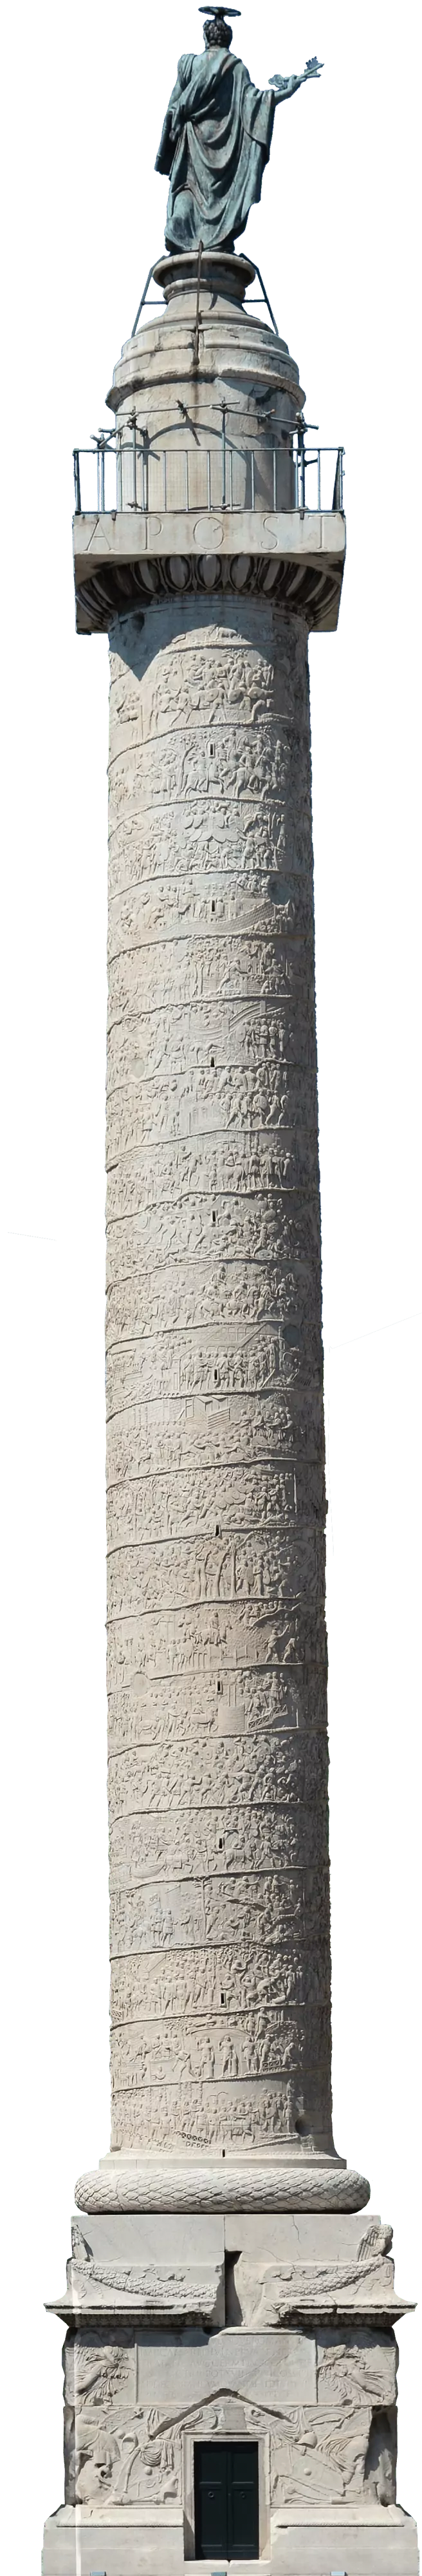 Trajan's Column, Ancient Rome